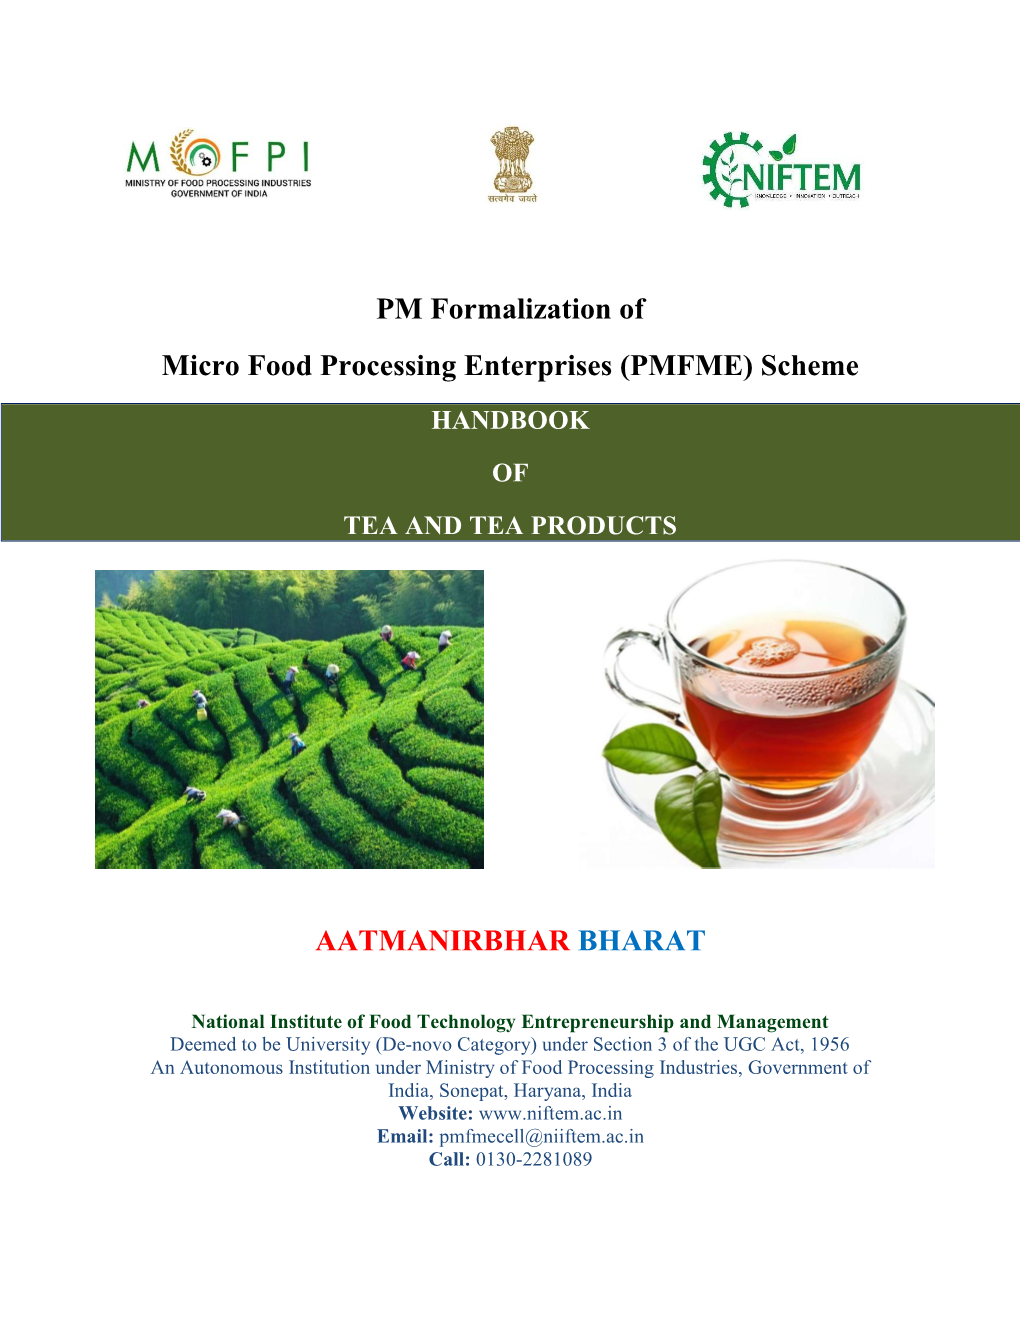 PMFME) Scheme HANDBOOK of TEA and TEA PRODUCTS